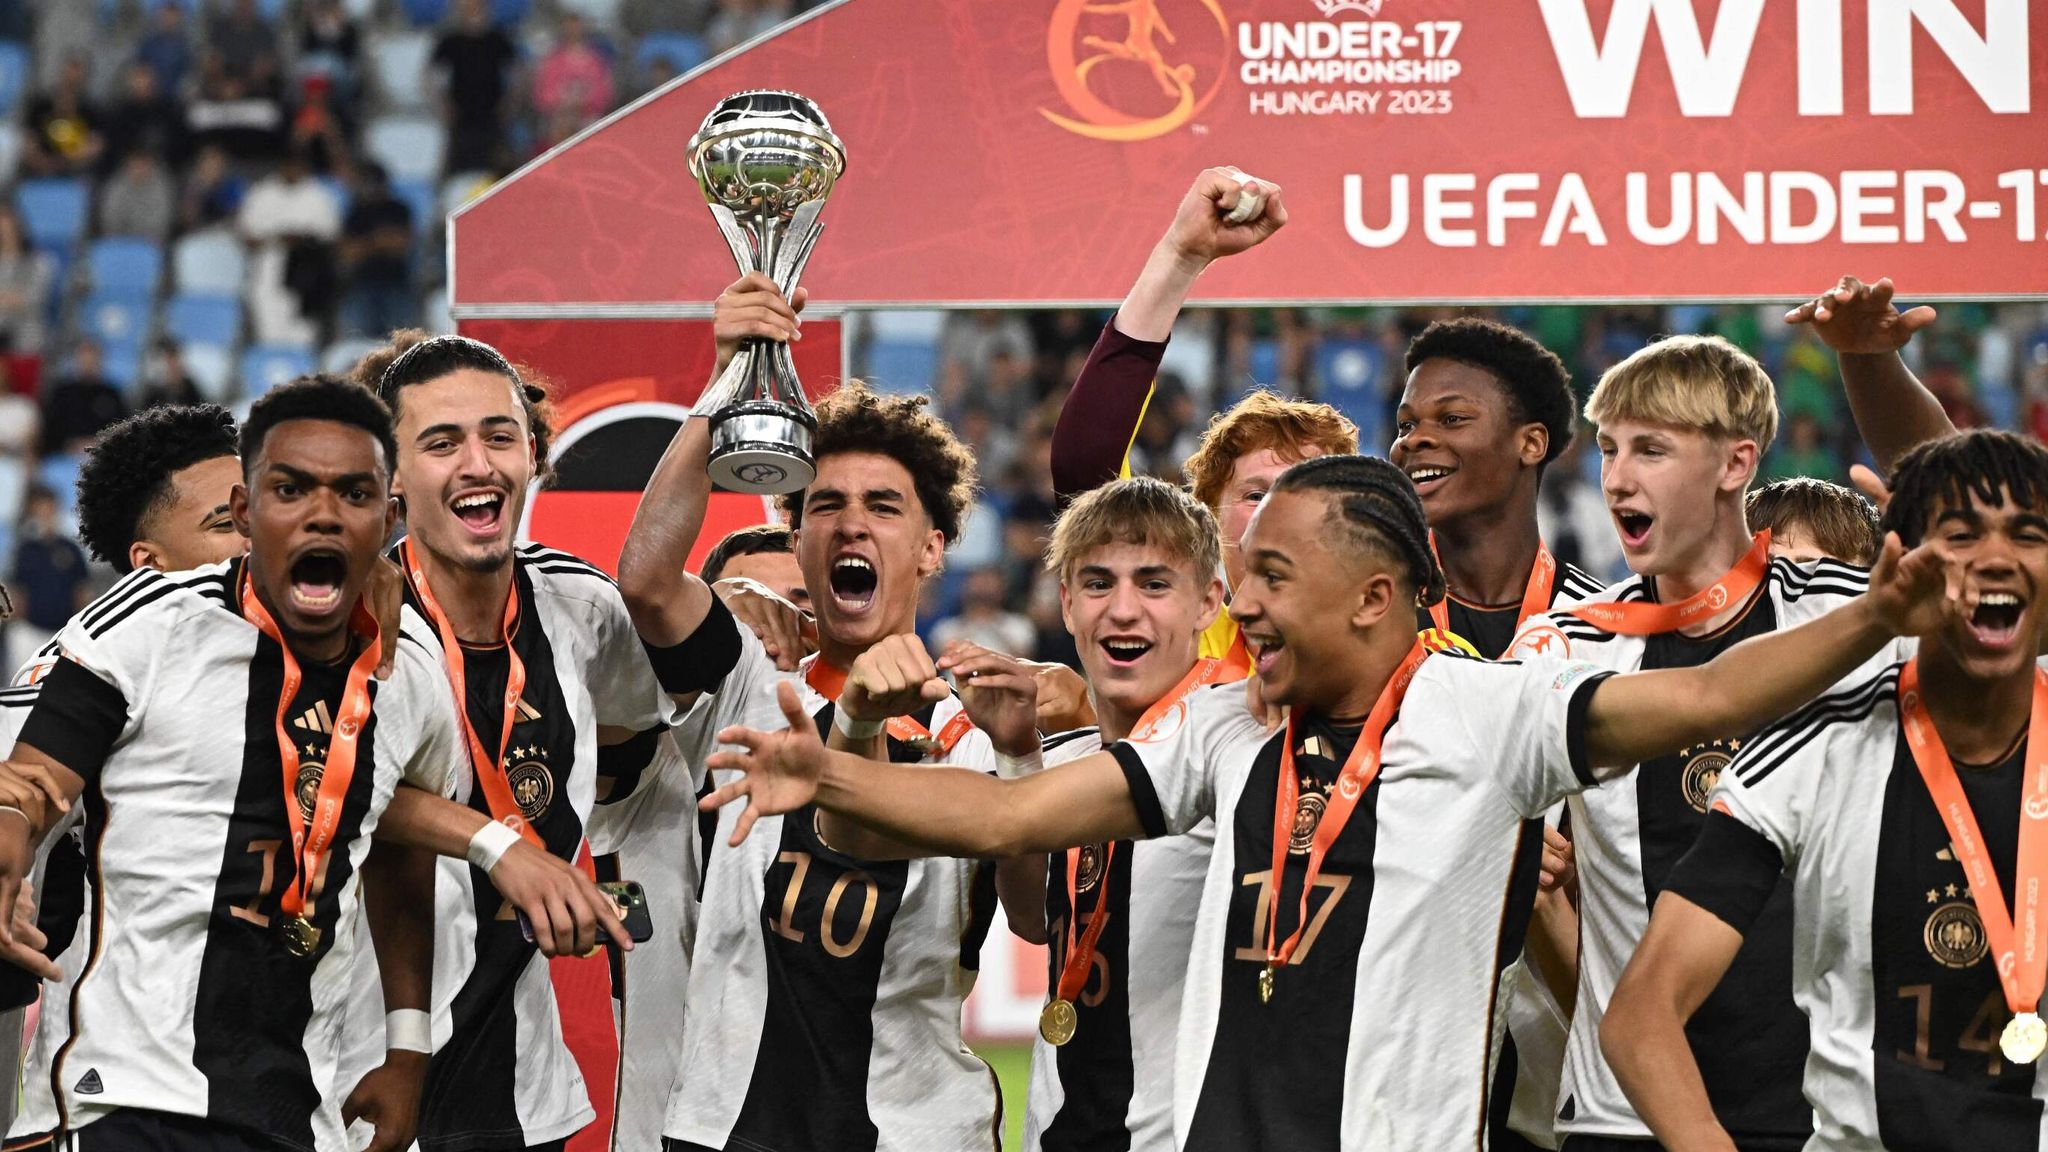 Virtual reality helps Germany U17 team win European Championship as